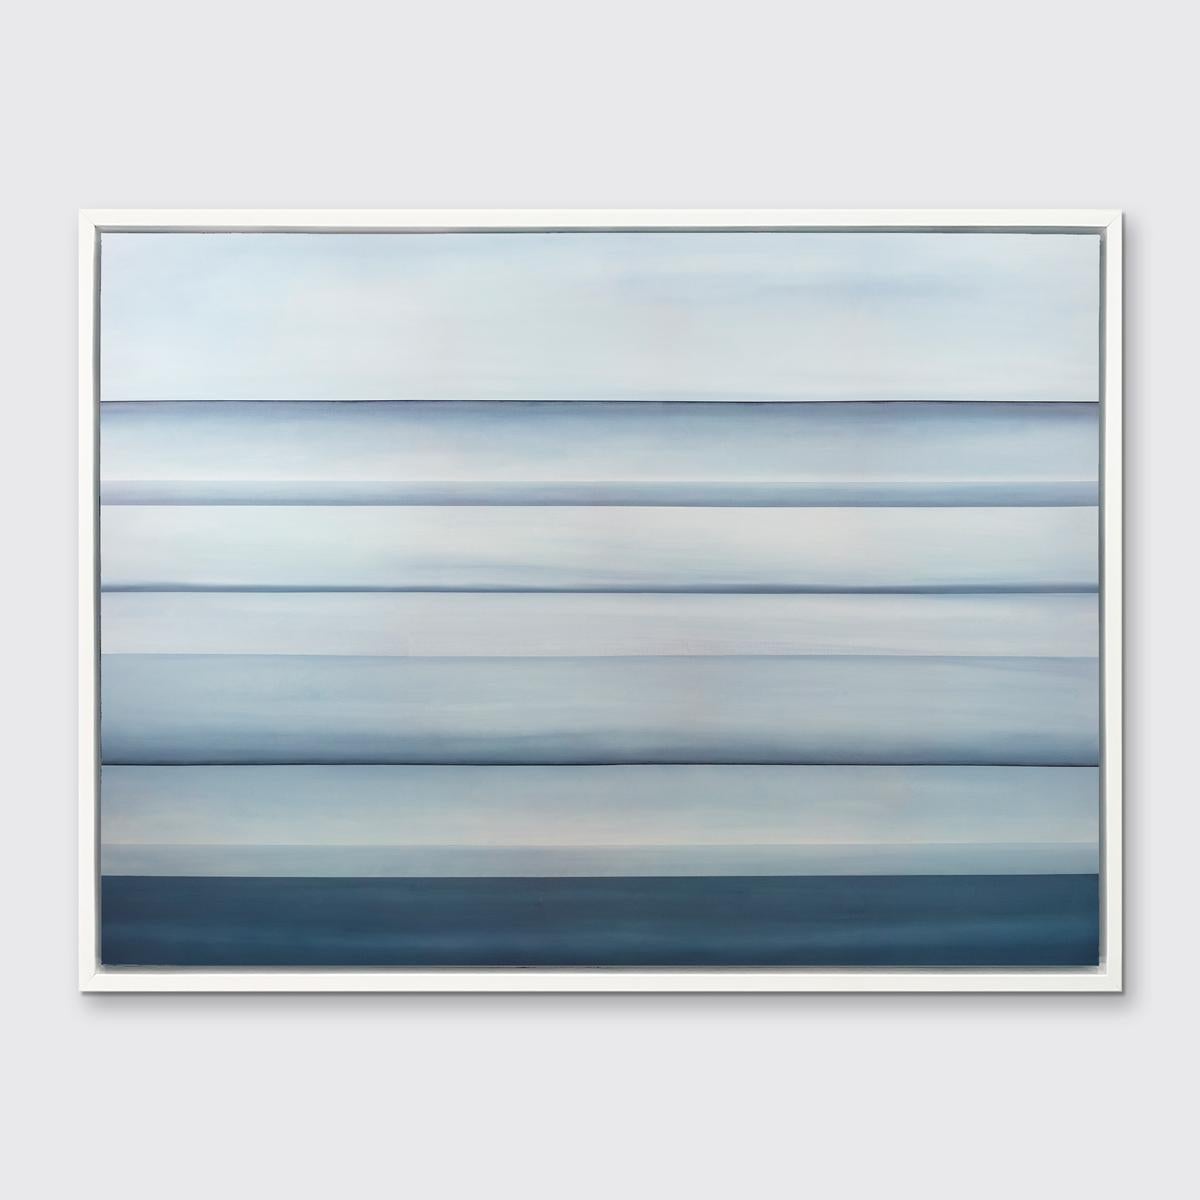 Tony Iadicicco Abstract Print - "Each Step" Framed Limited Edition Giclee Print, 18" x 24"